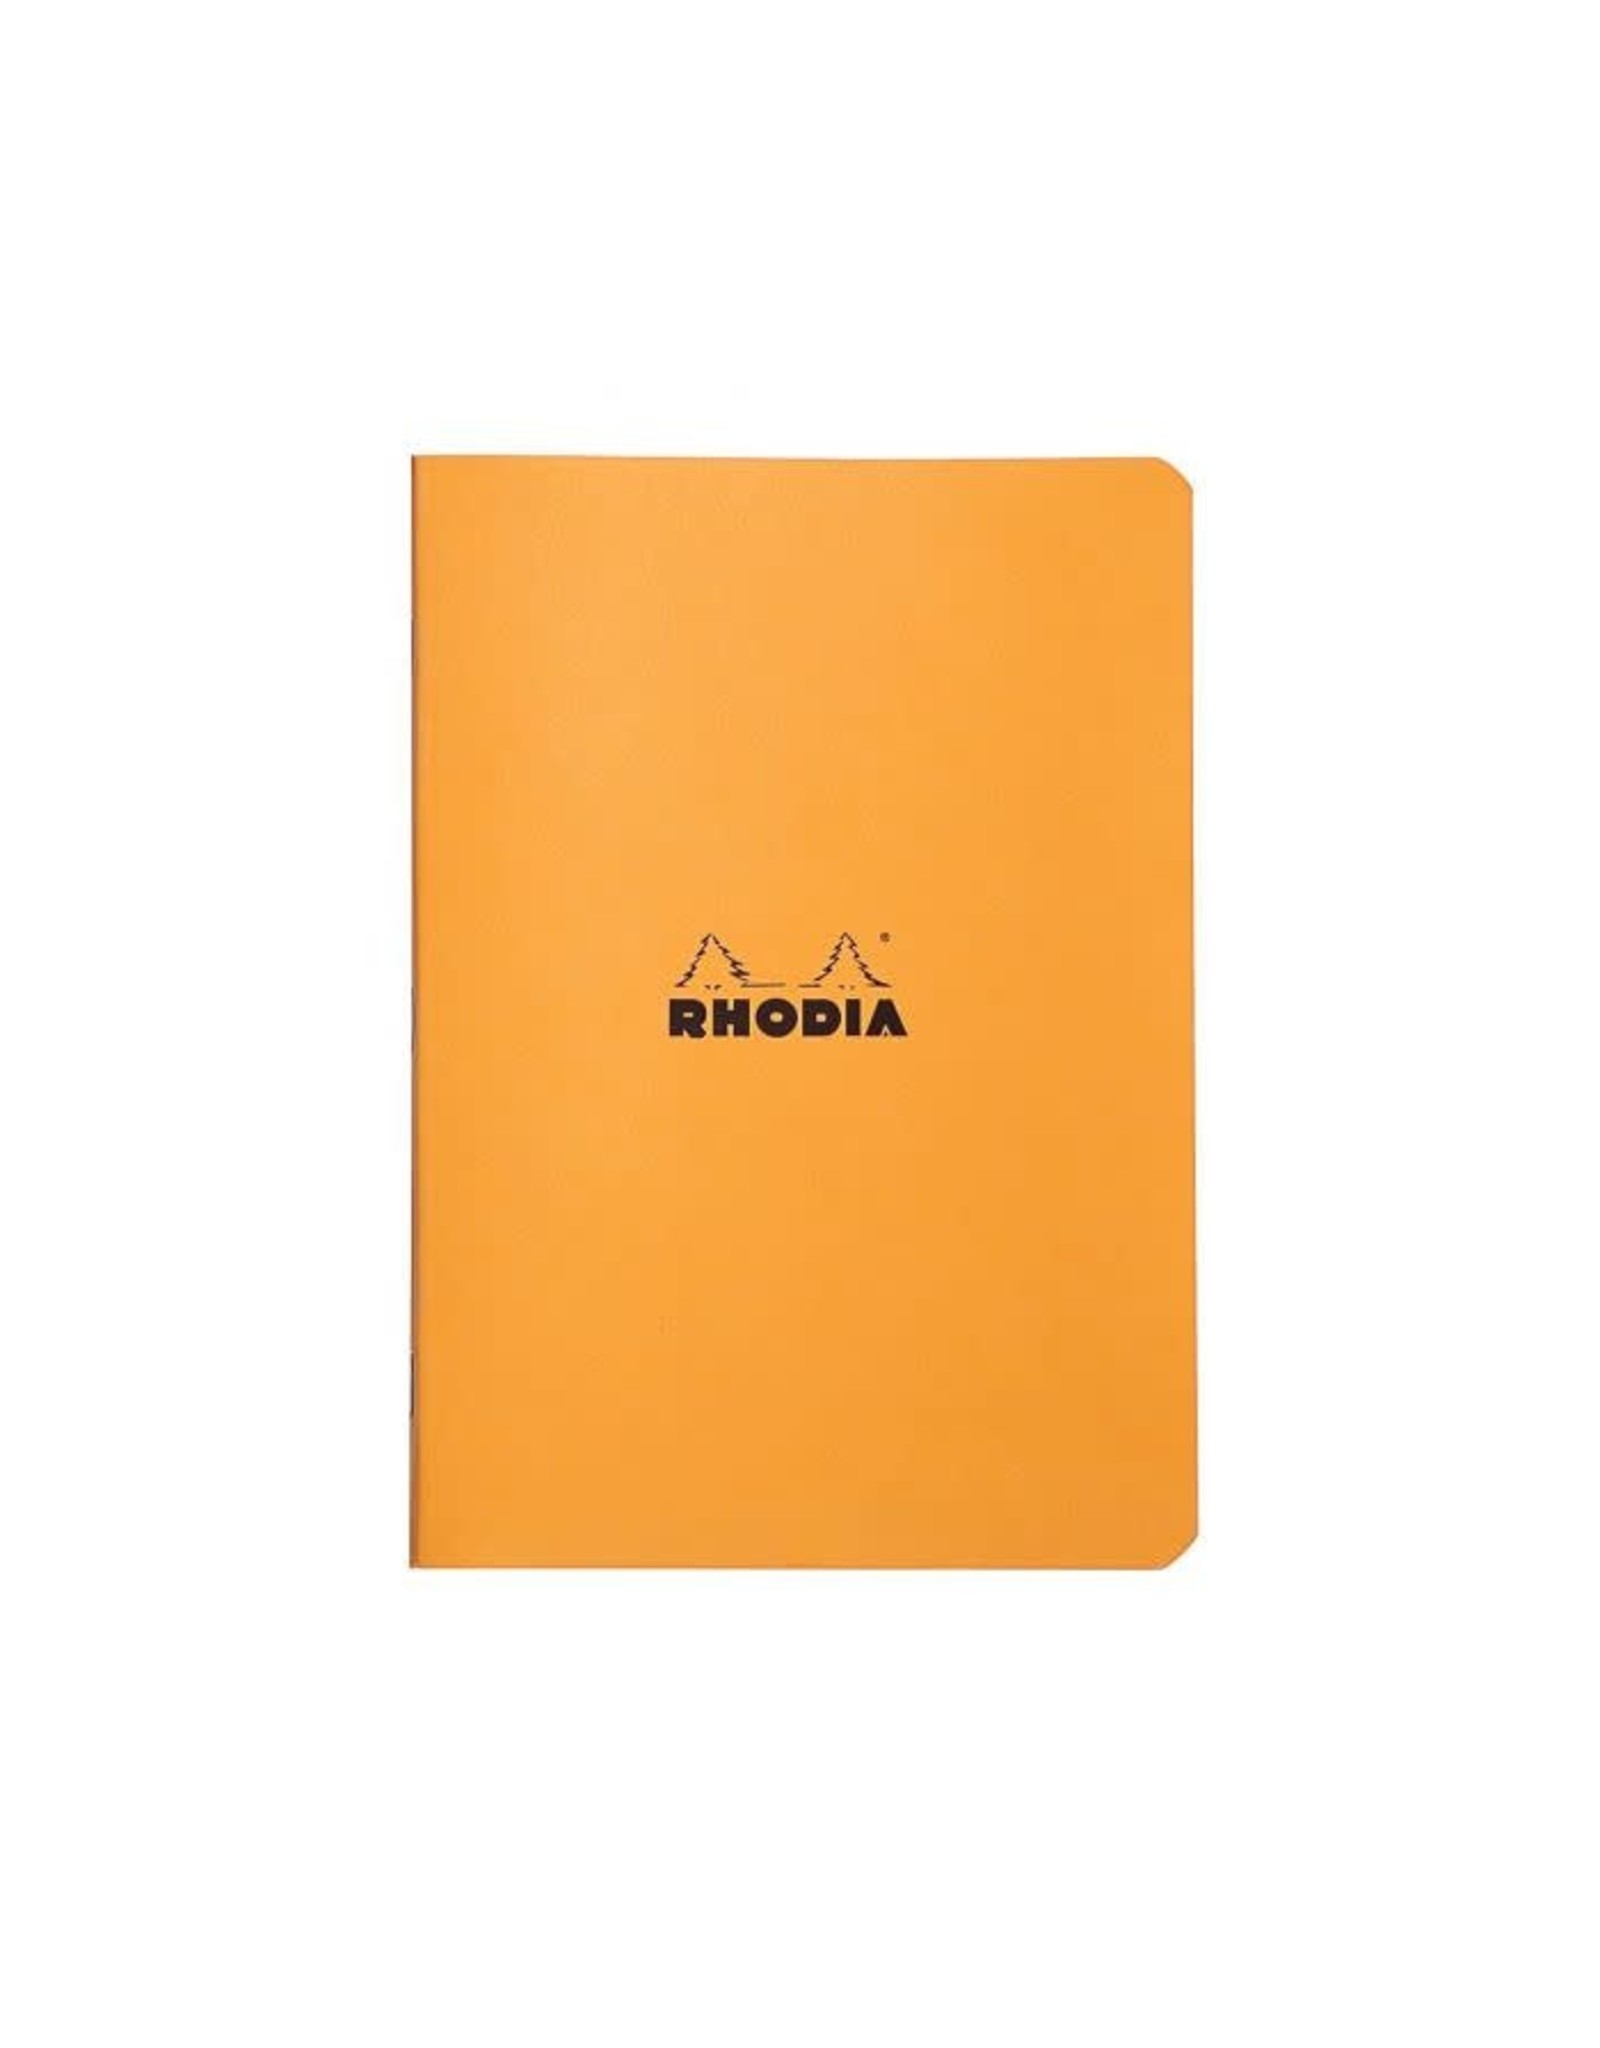 Rhodia Orange Lined Classic Notebook 6 x 8.25